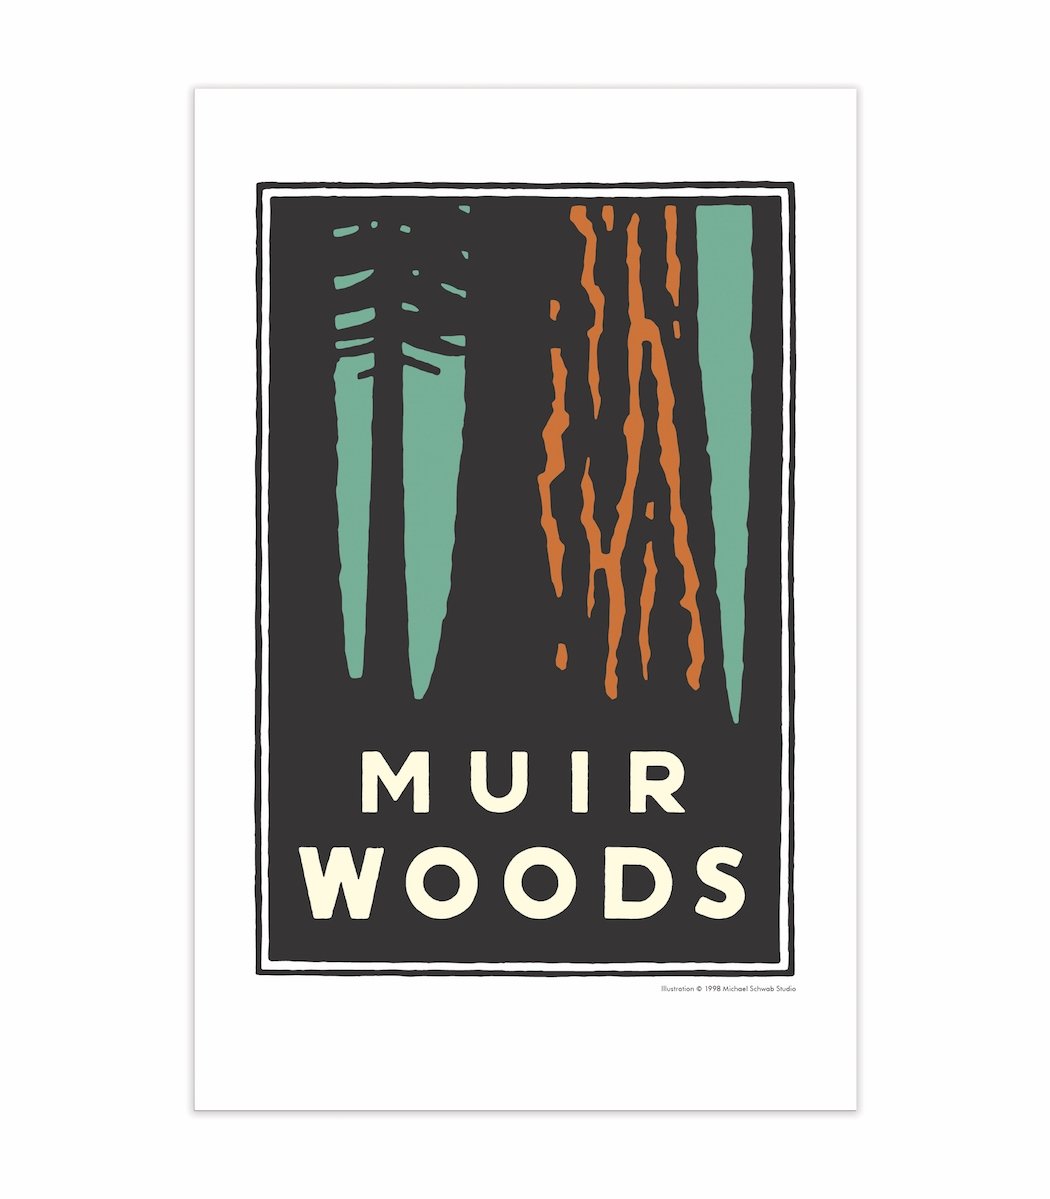 11 x 17 inch Muir Woods print, art by Michael Schwab.